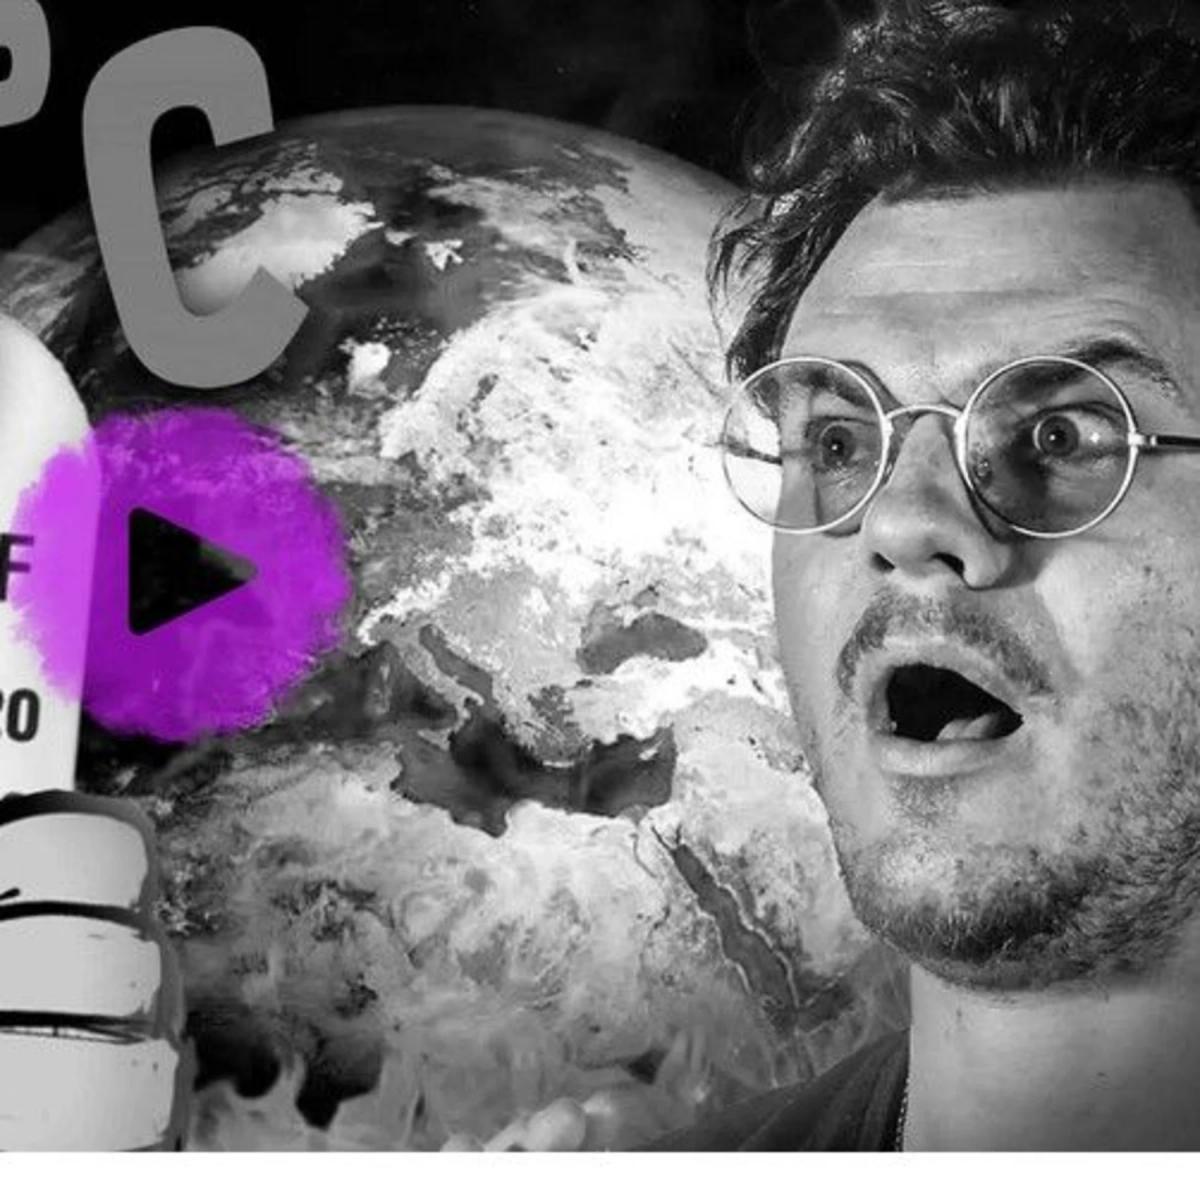 1 scientist - CO2 + 1 YouTuber = 2 million views